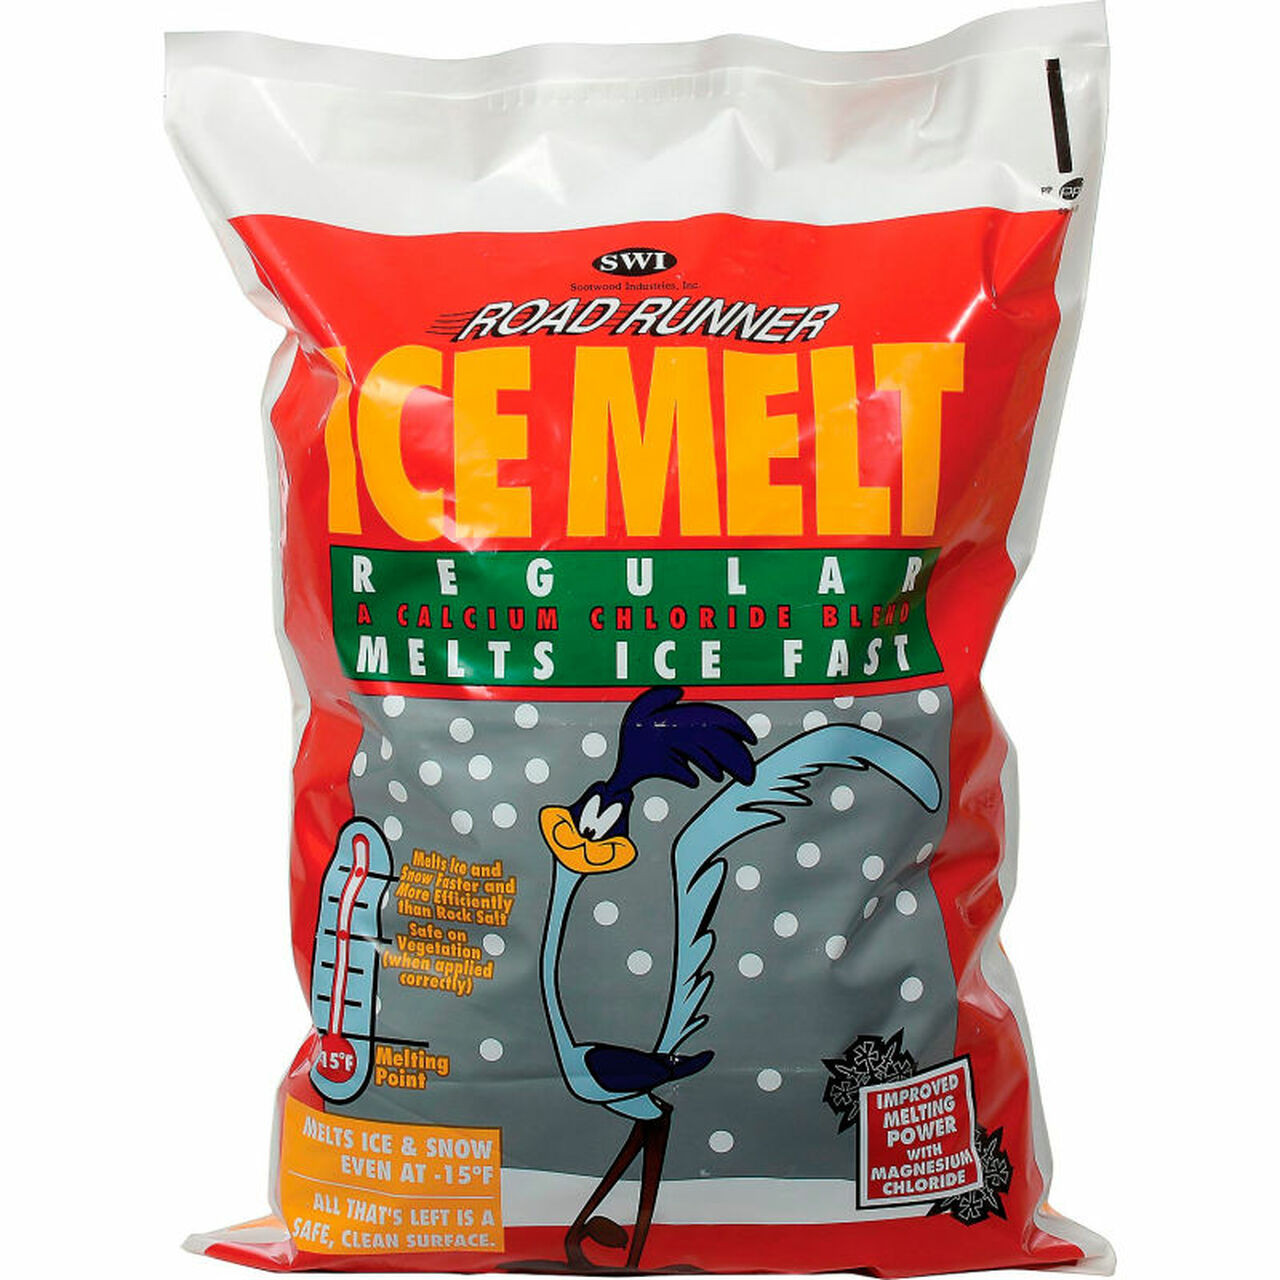 Hot Rock 50-lb Sodium Chloride Rock Salt Ice Melt in the Ice Melt  department at